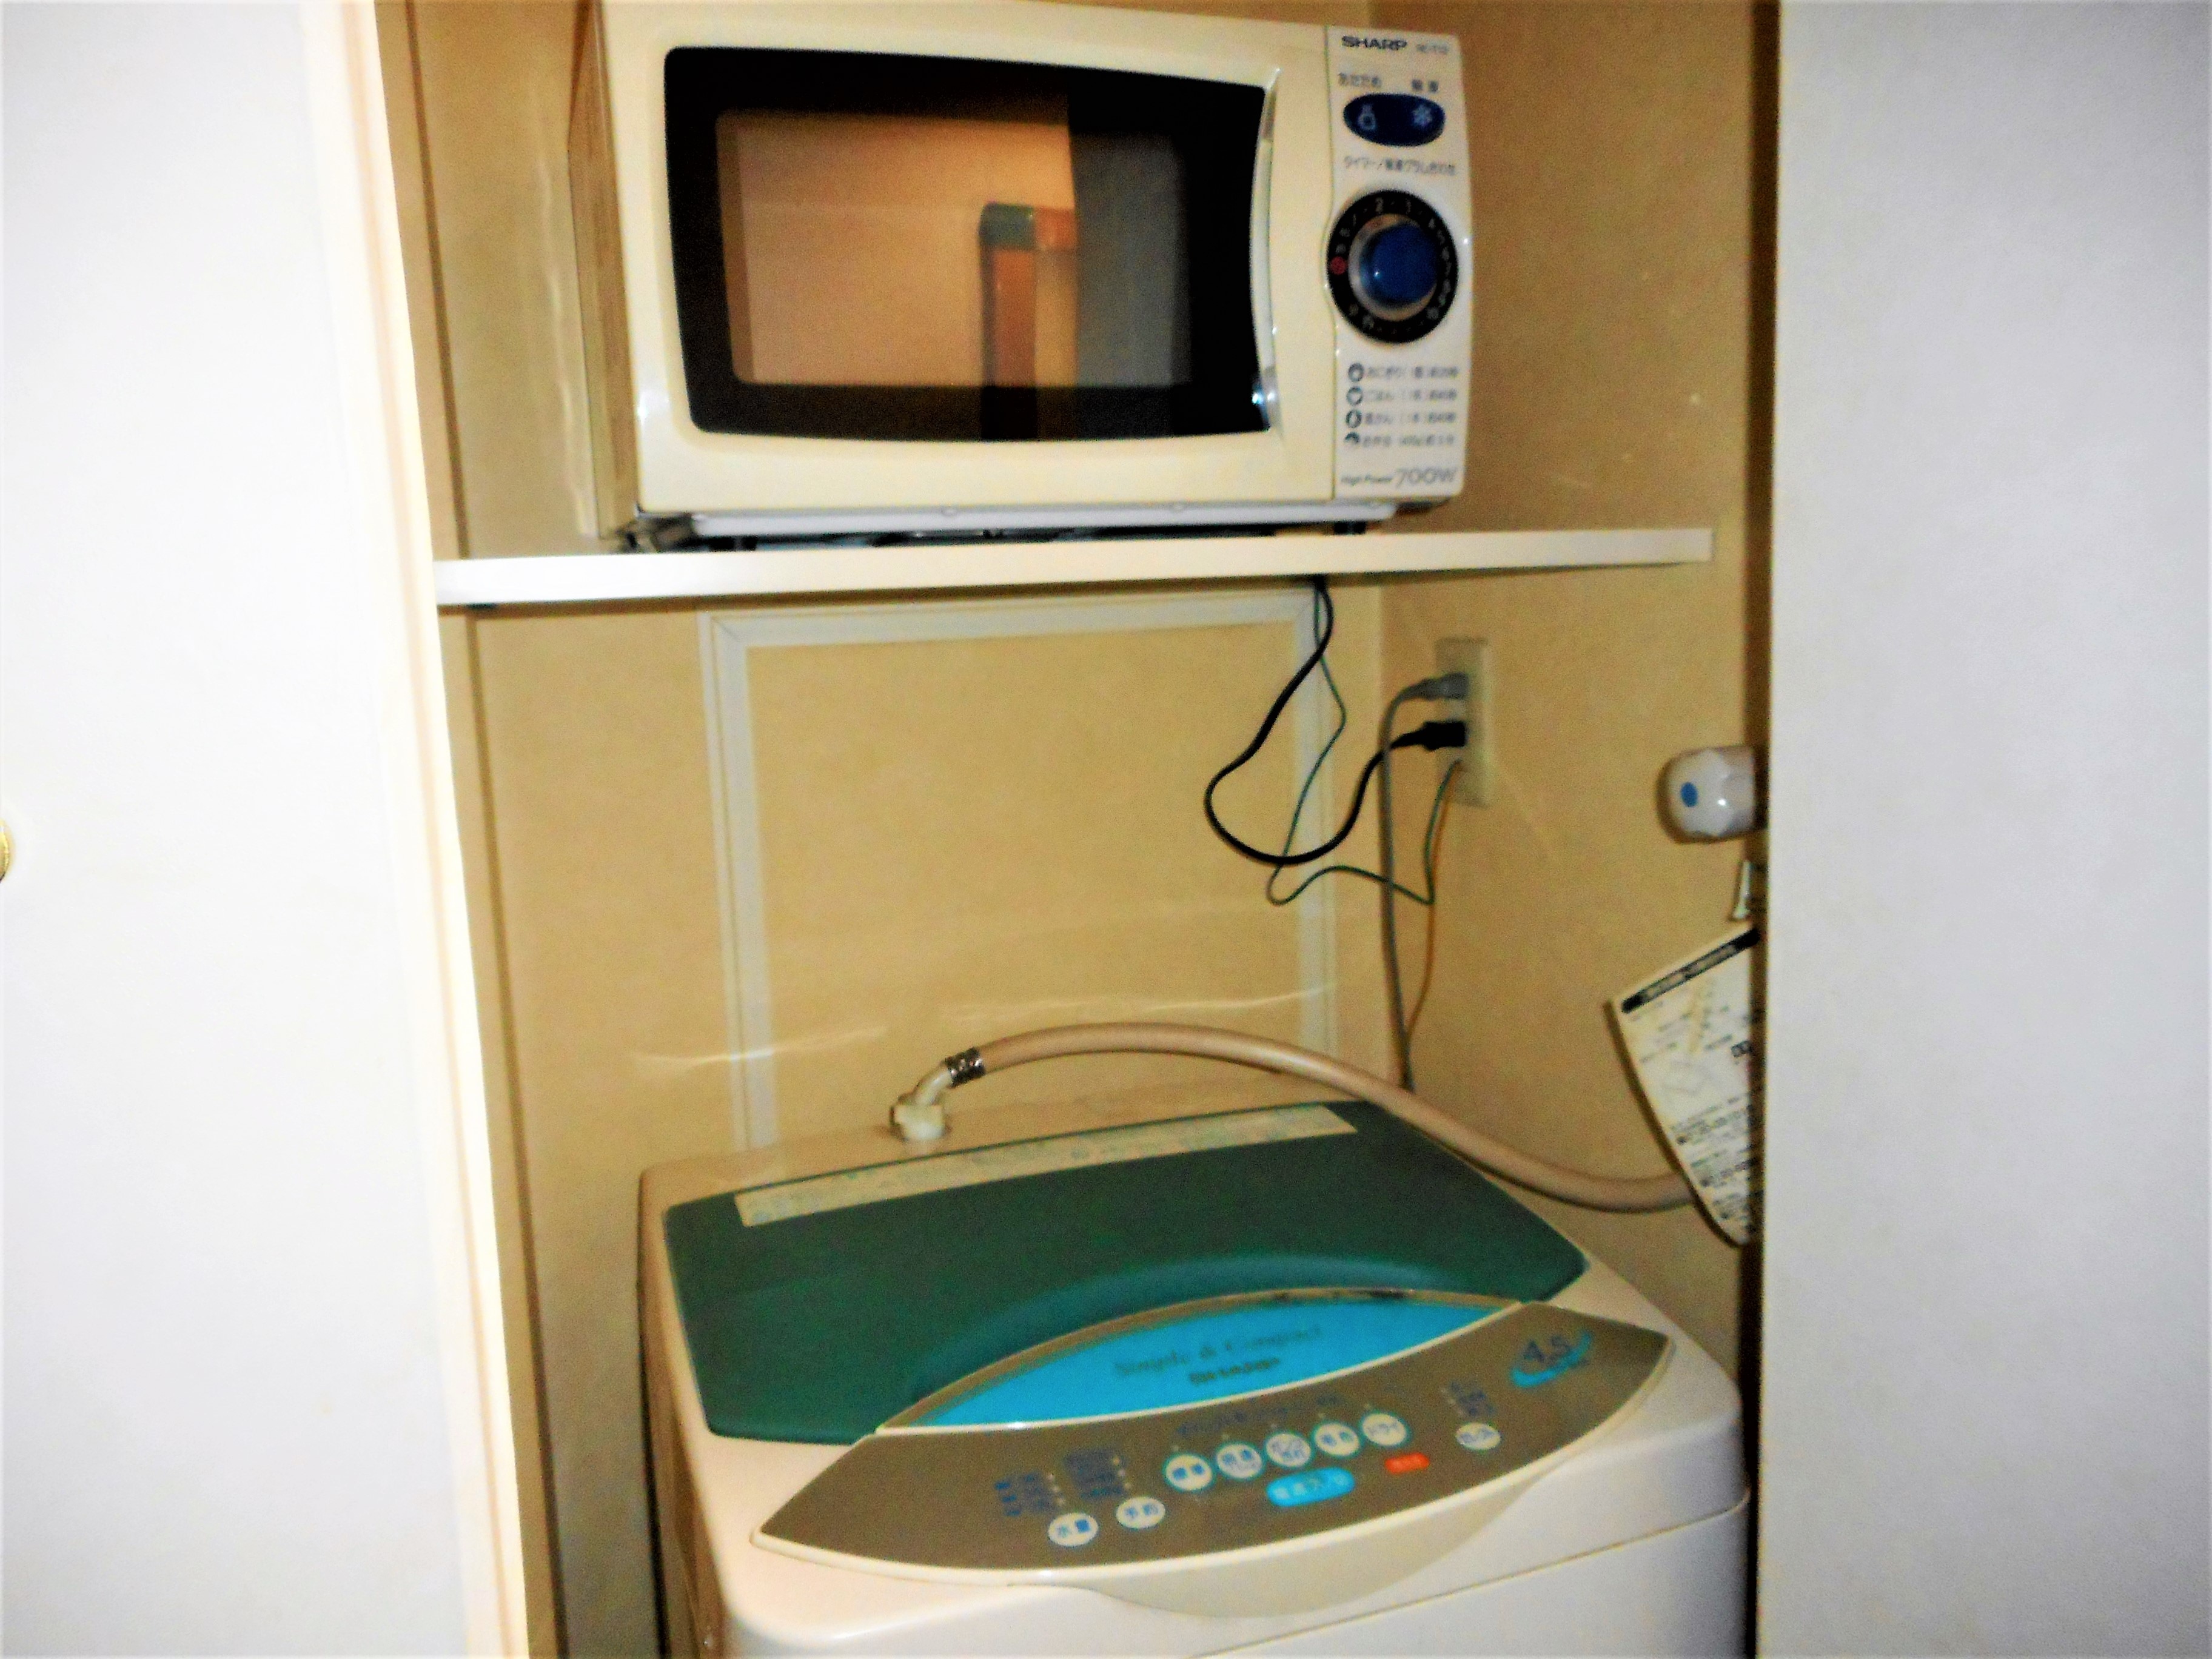 Microwave / washing machine